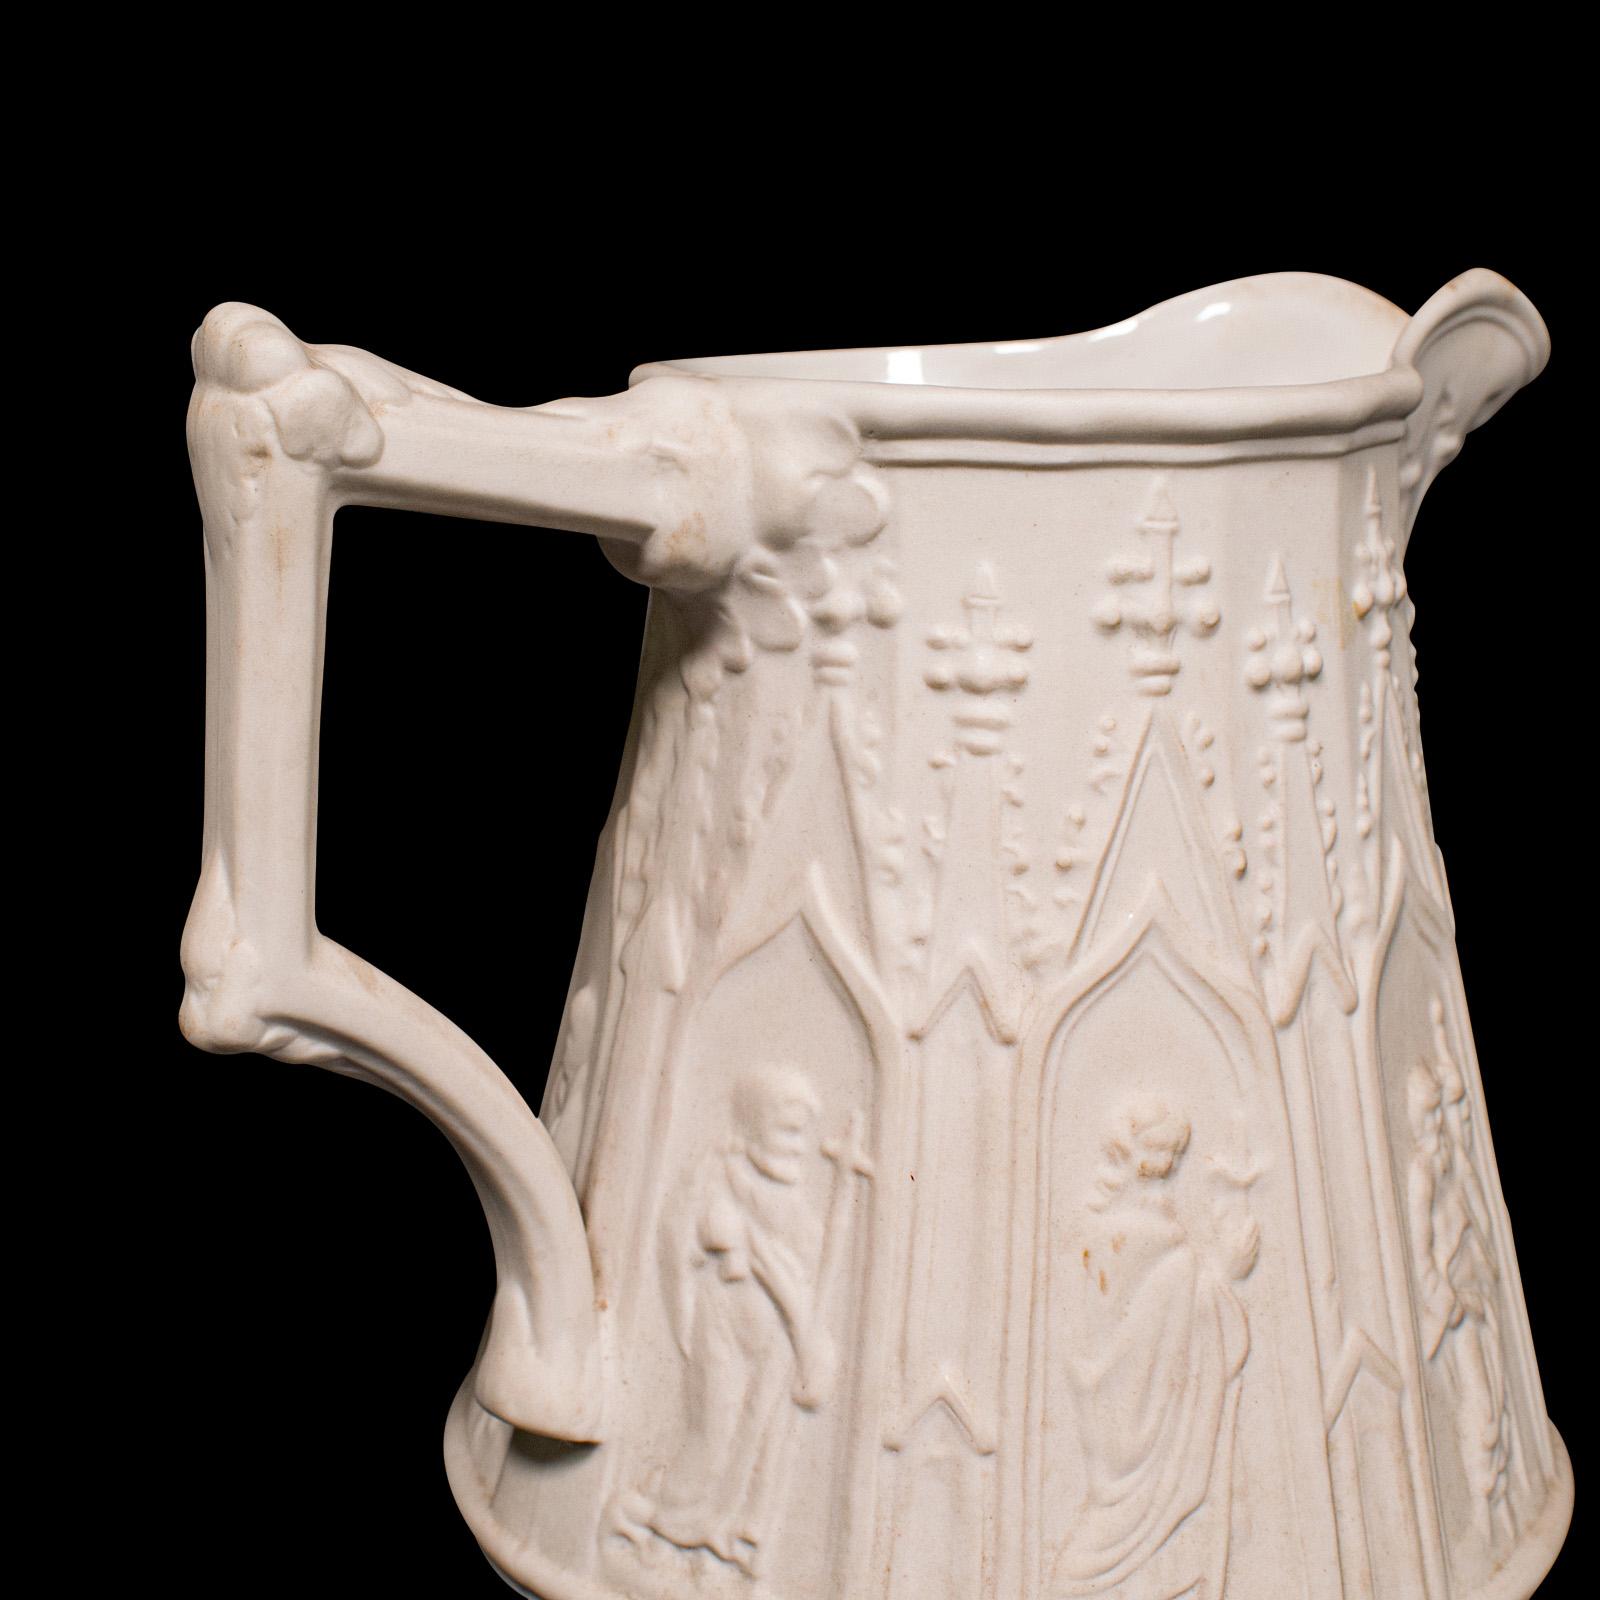 Vintage Pouring Jug, English, Parian Ware Ceramic, Serving Creamer, Decorative For Sale 3